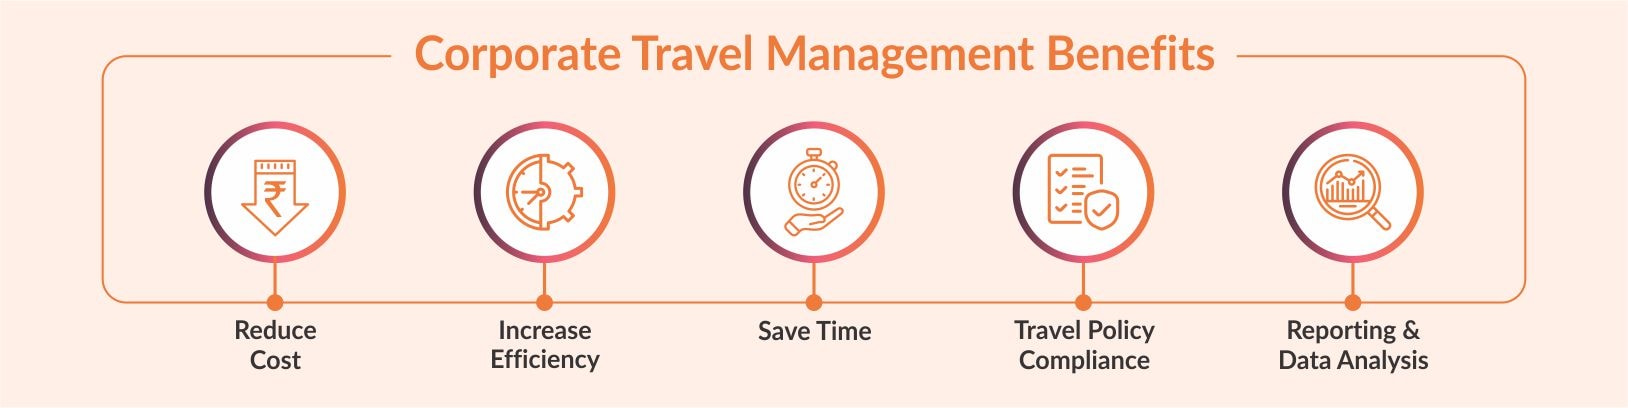 Corporate Travel Management Benefits